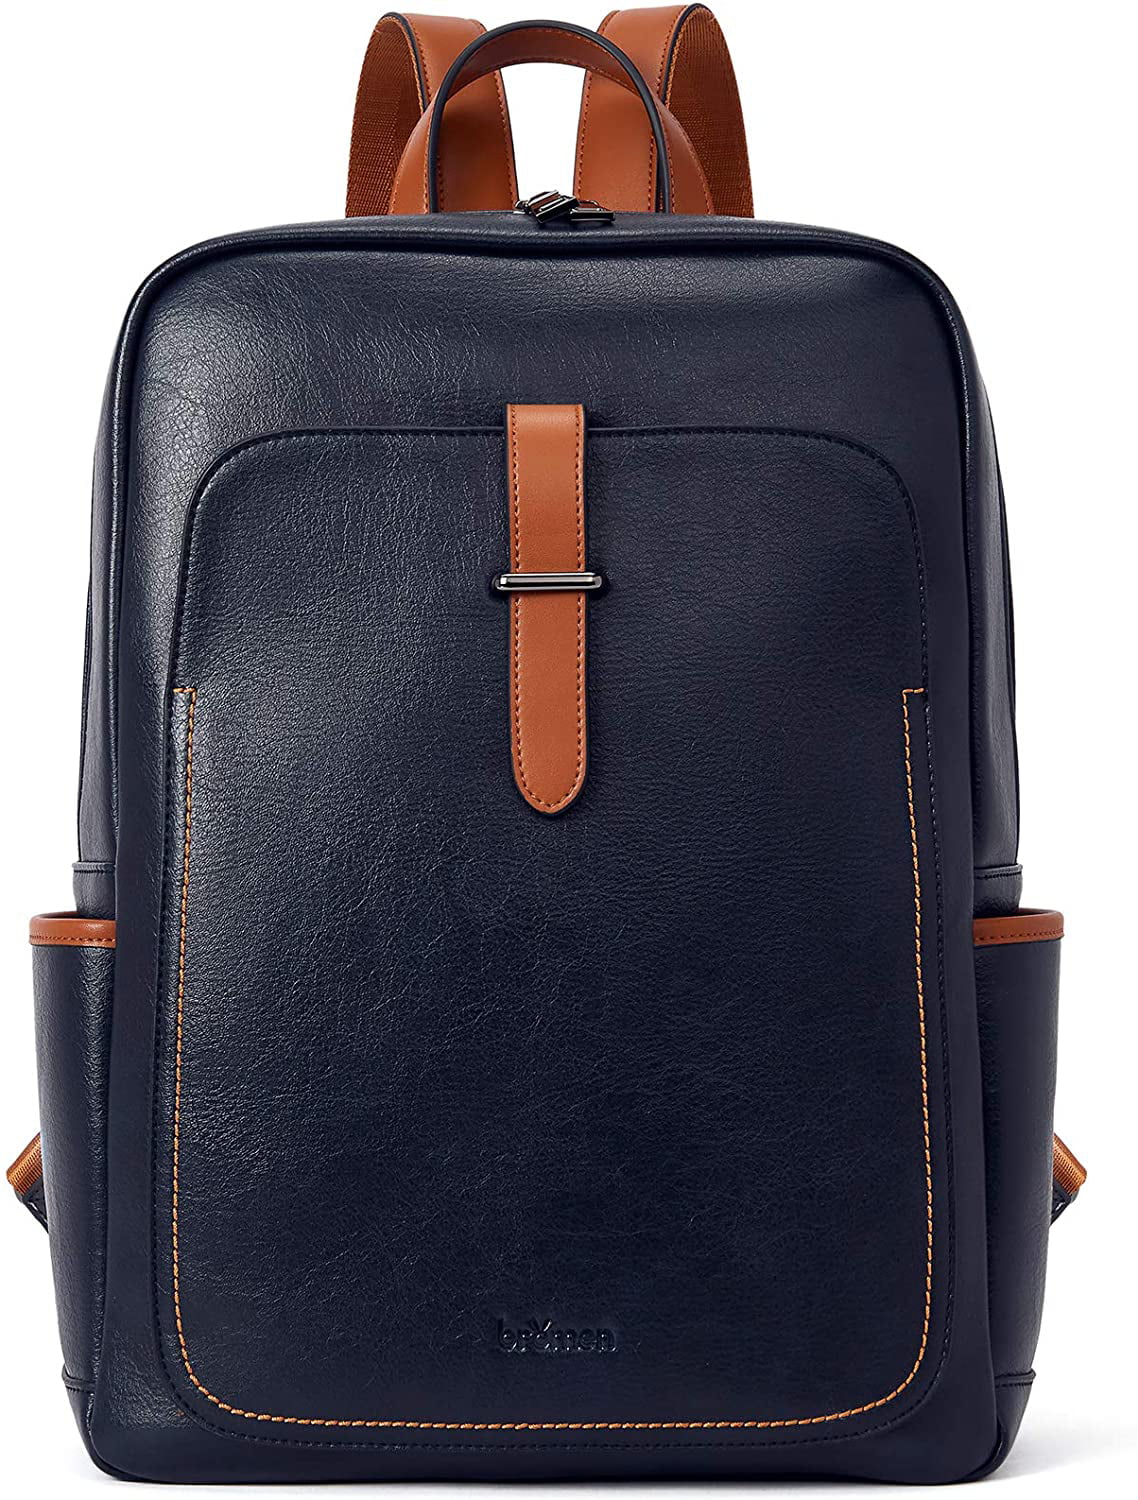 BROMEN Leather Laptop Backpack Purse for Women Travel 15.6 inch Computer Bag Fashion College School Bookbag